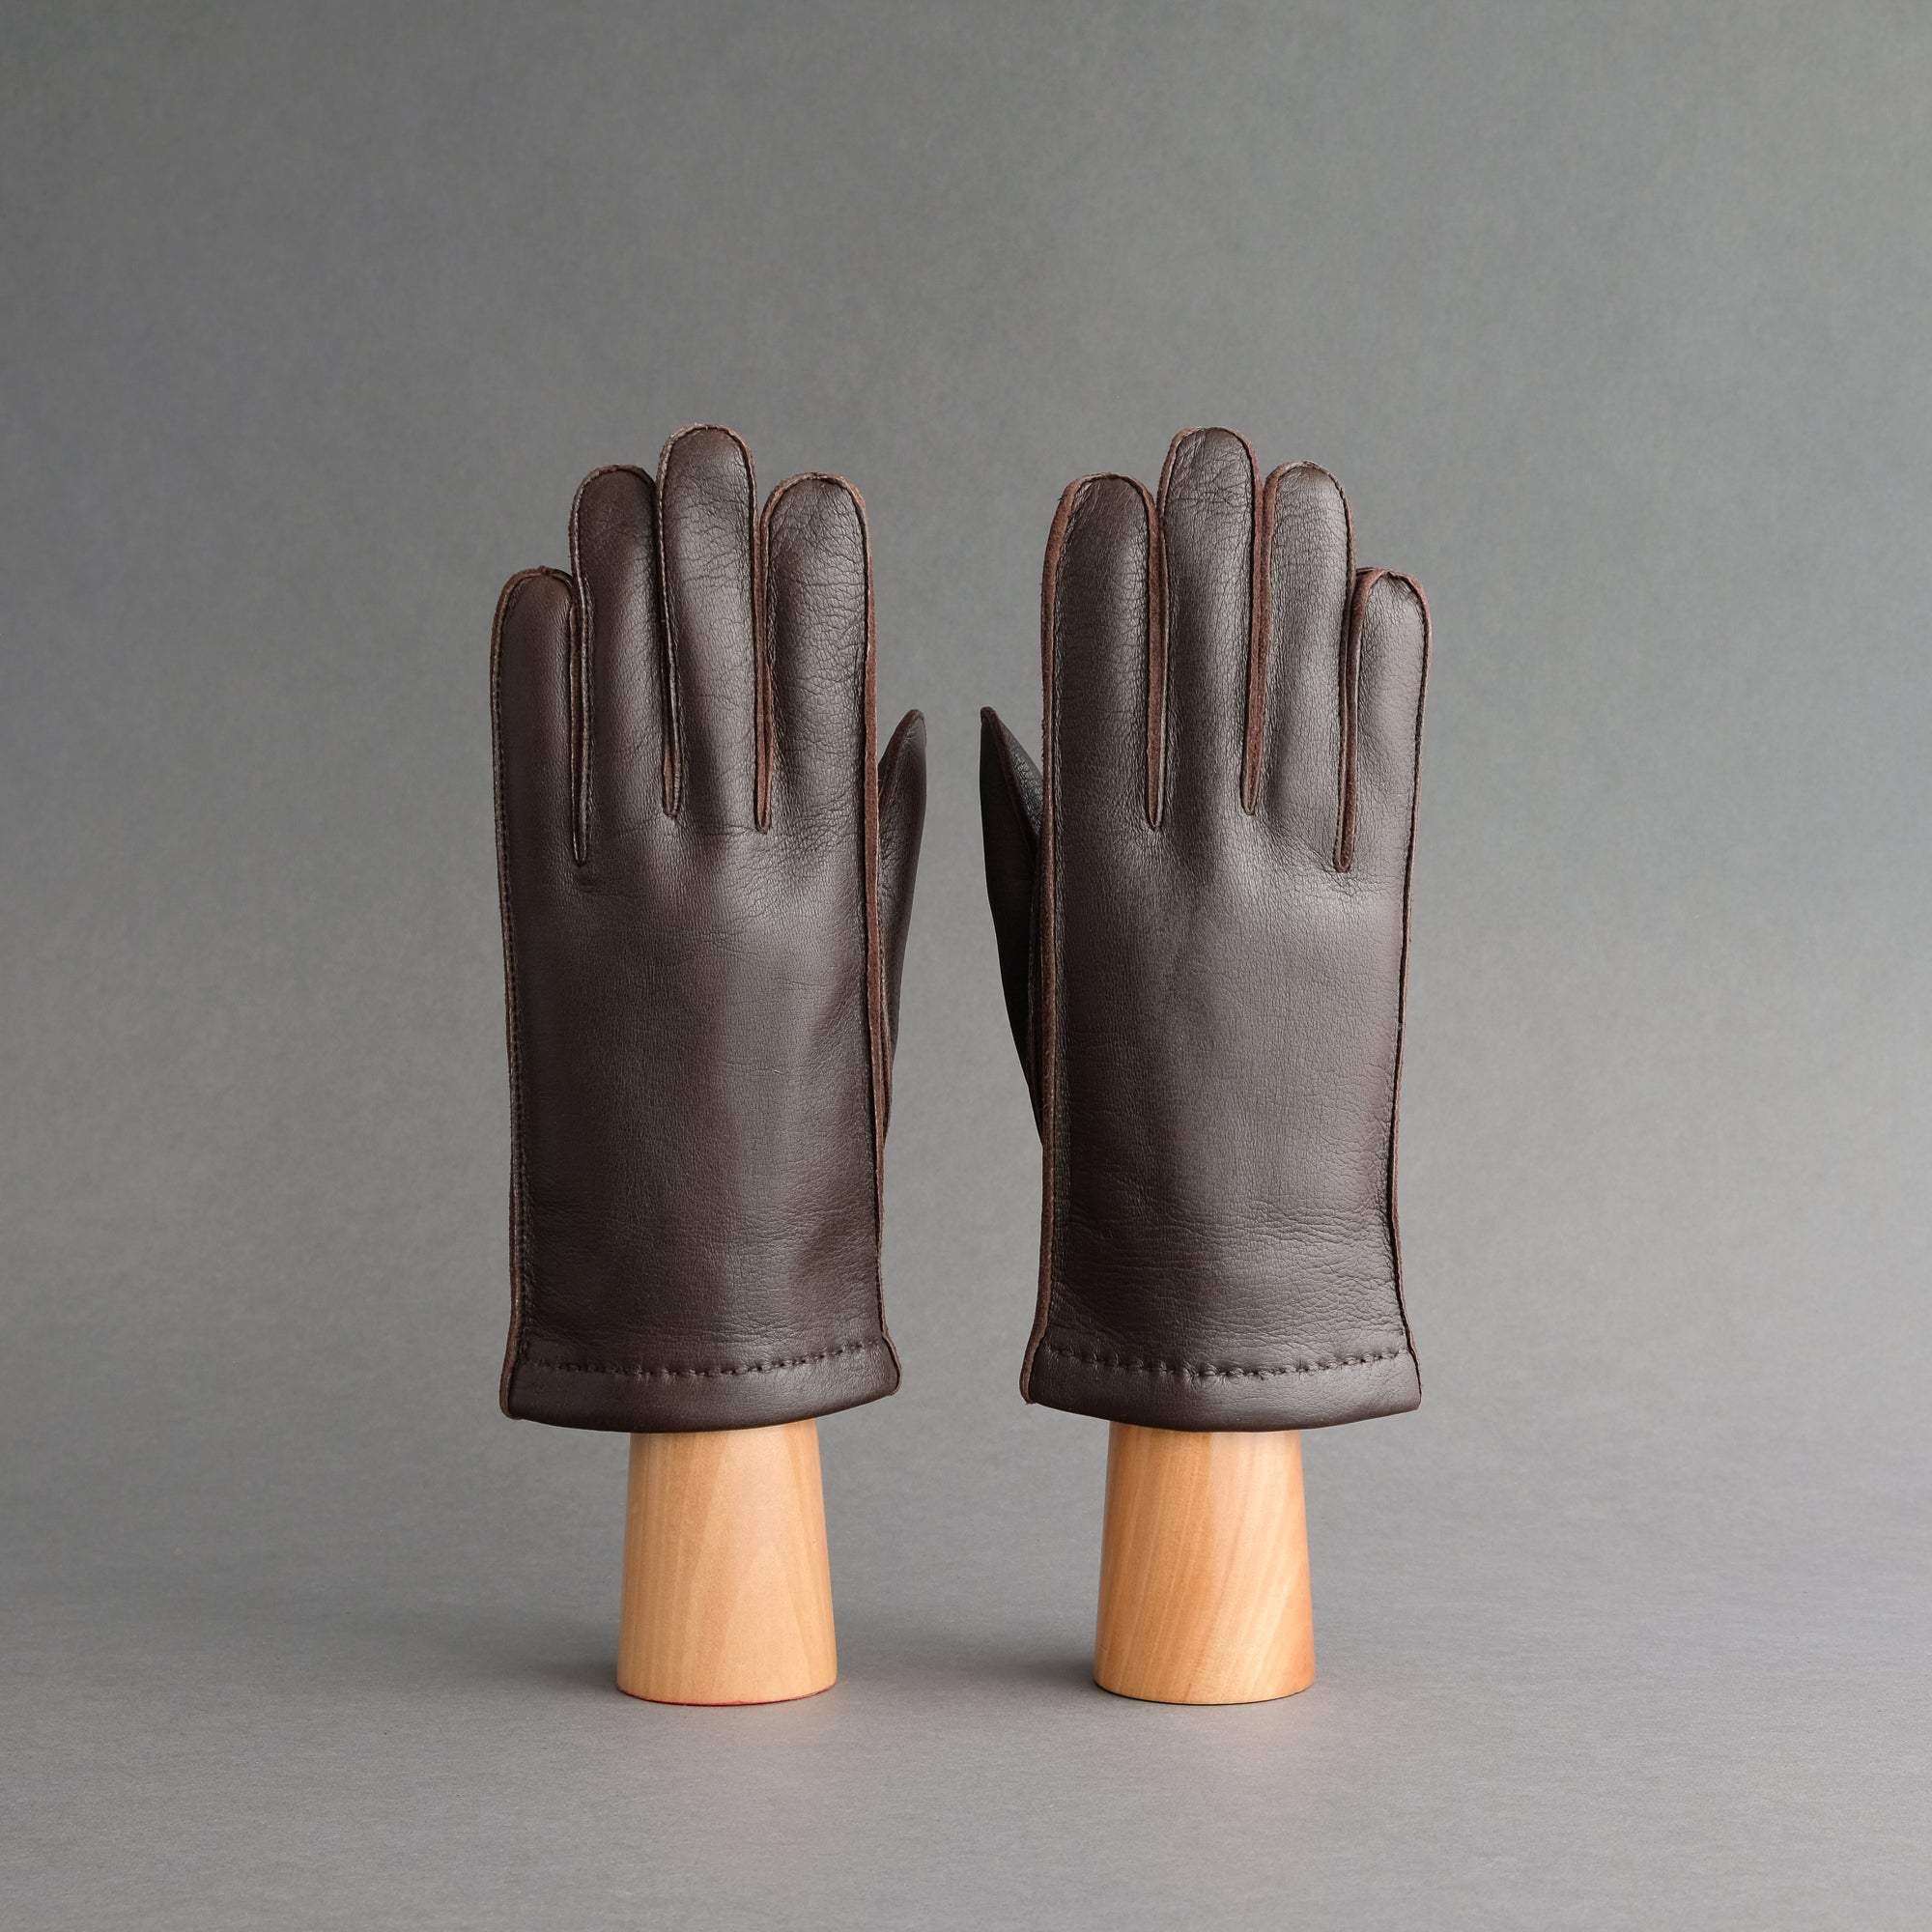 Herrenhandschuhe Handschuhe Ziegenleder – jeansblauem mit aus Thomas Riemer Handmade Gloves Wien gefüttert TR Kaschmir -